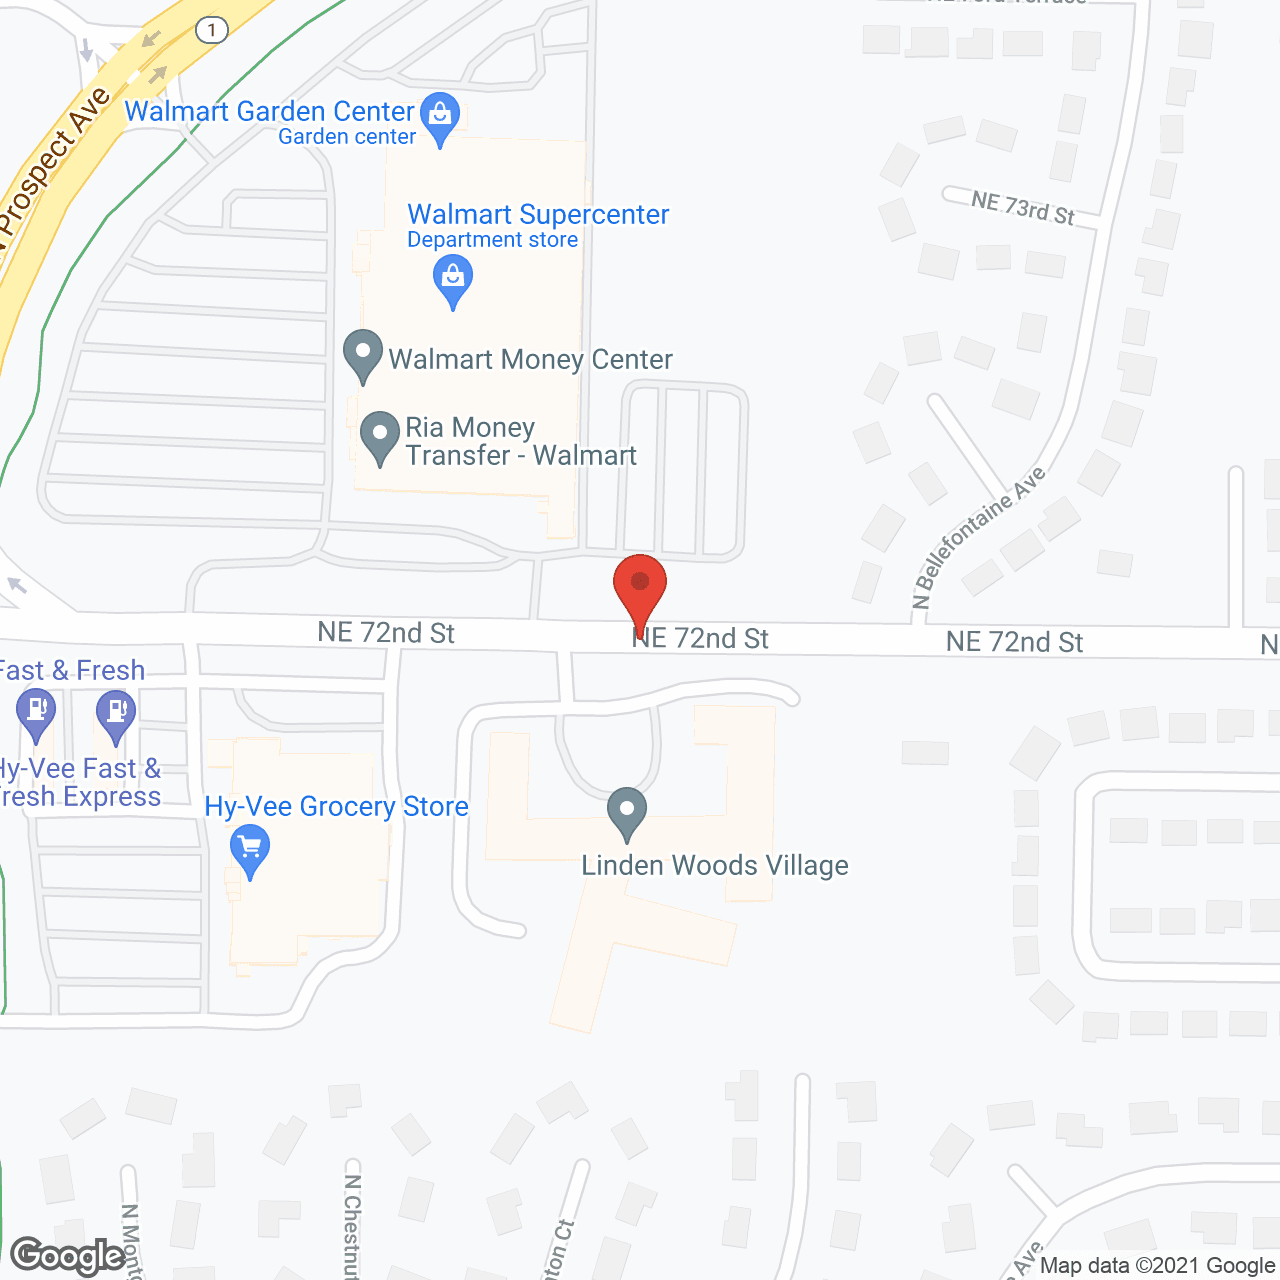 Linden Woods Village in google map